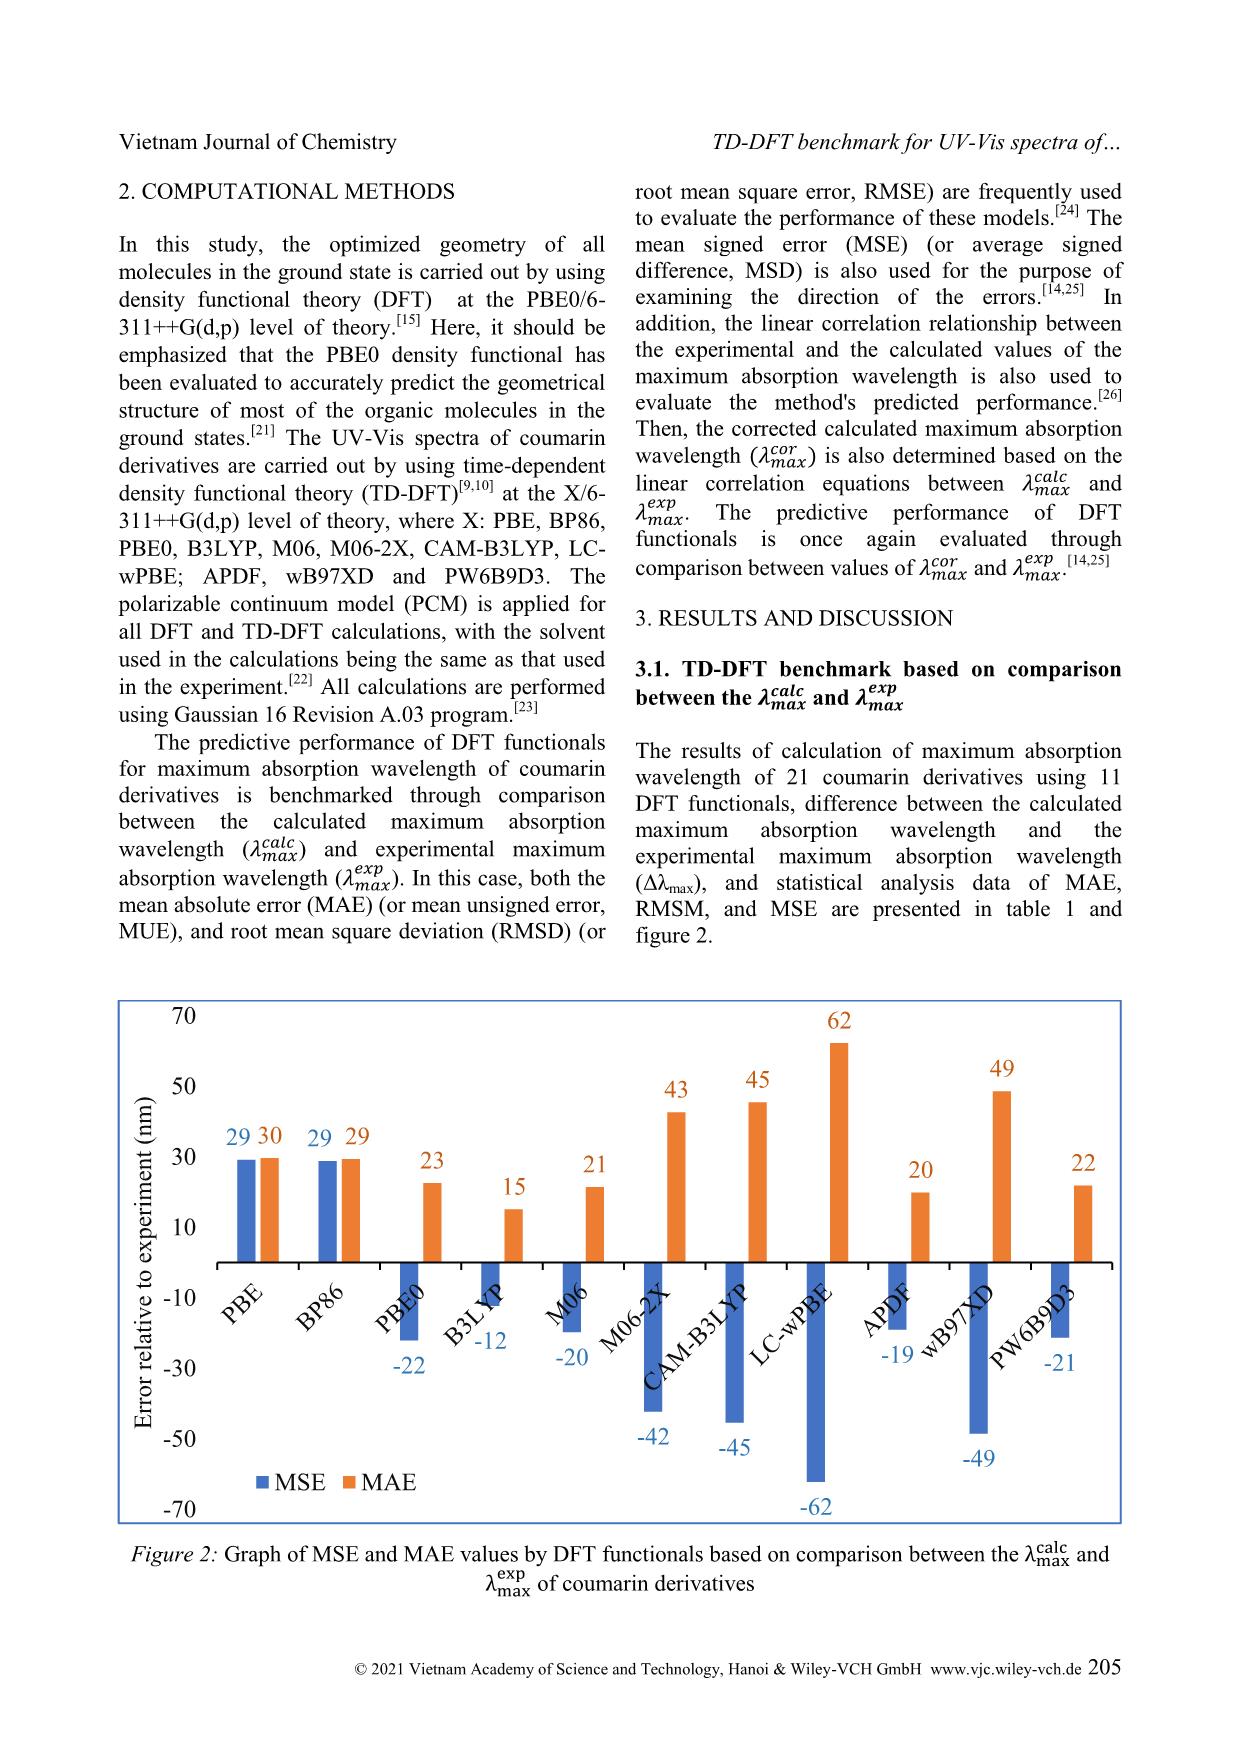 TD-DFT benchmark for UV-Vis spectra of coumarin derivatives trang 3